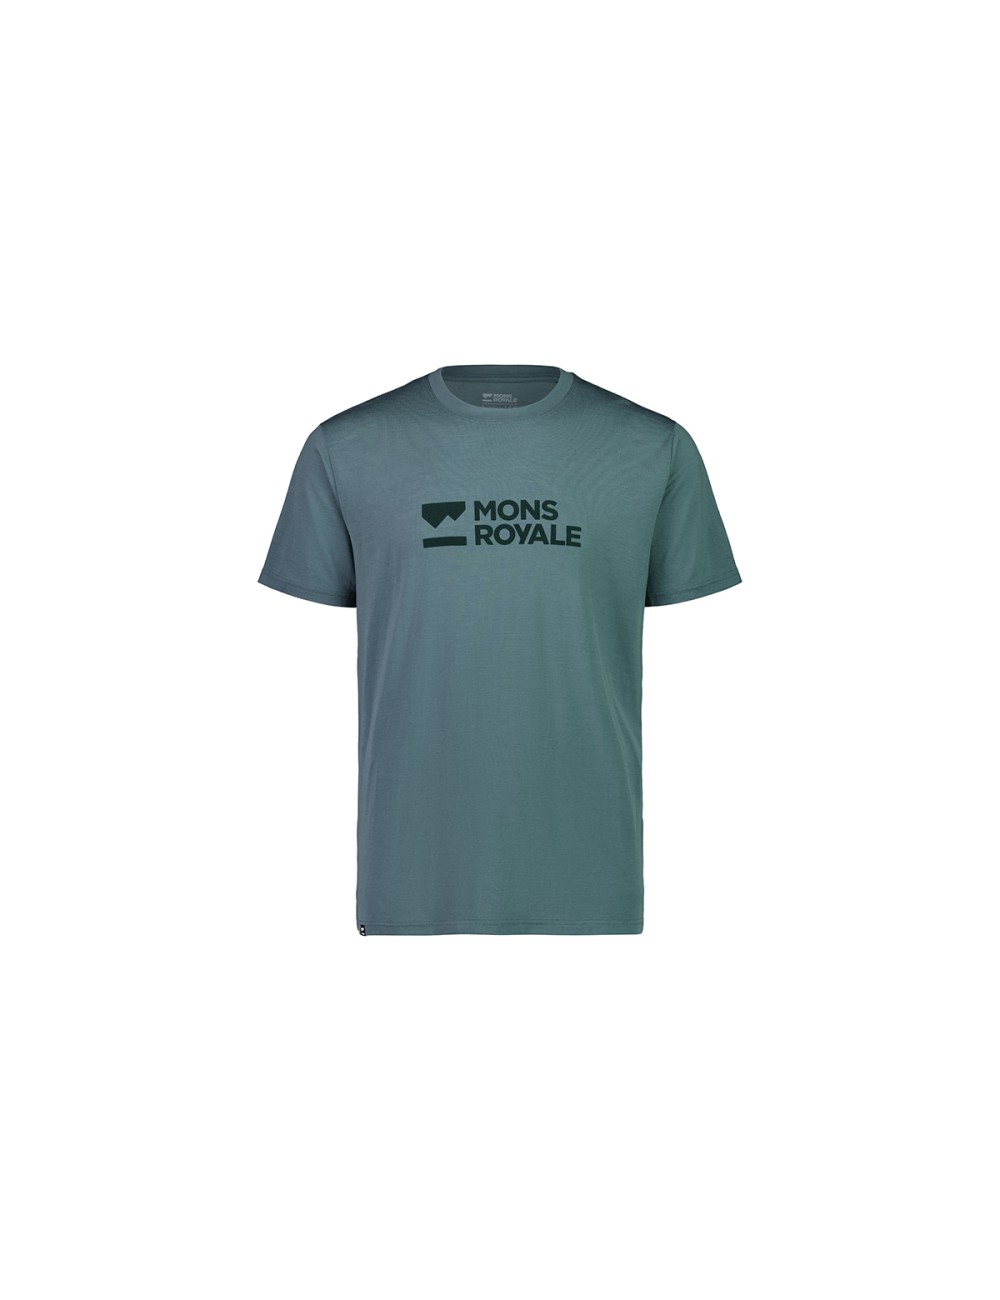 Mons Royale Icon T-Shirt - Burnt Sage_14590